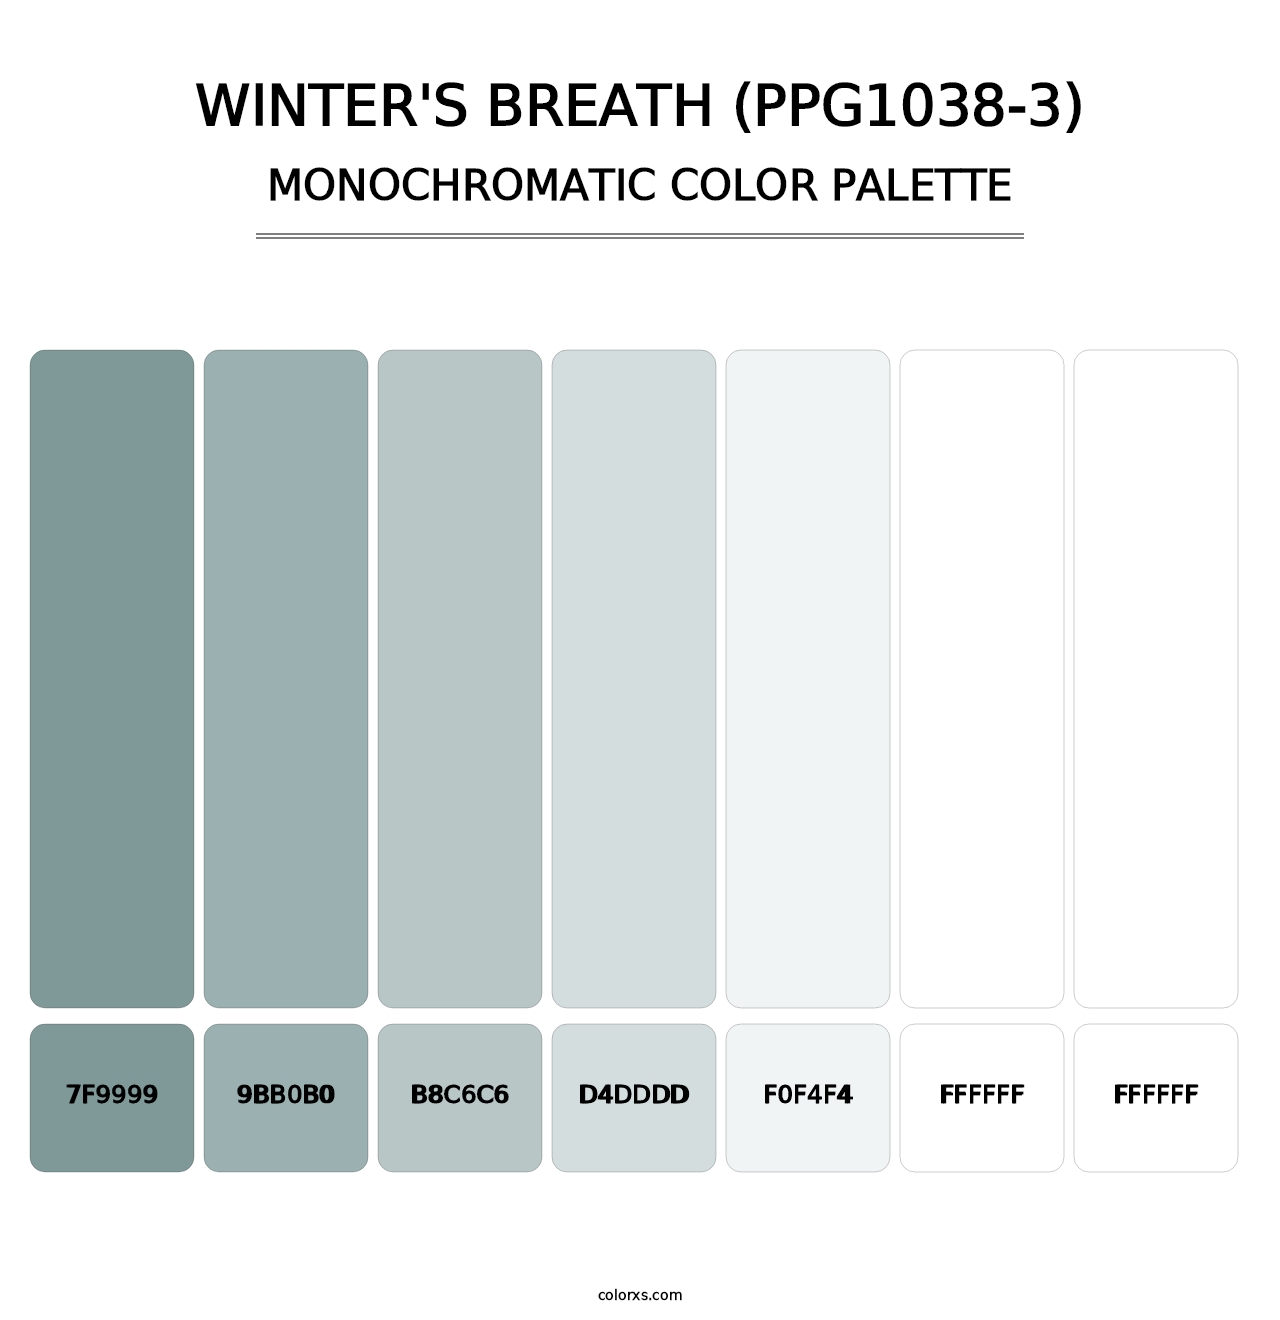 Winter's Breath (PPG1038-3) - Monochromatic Color Palette